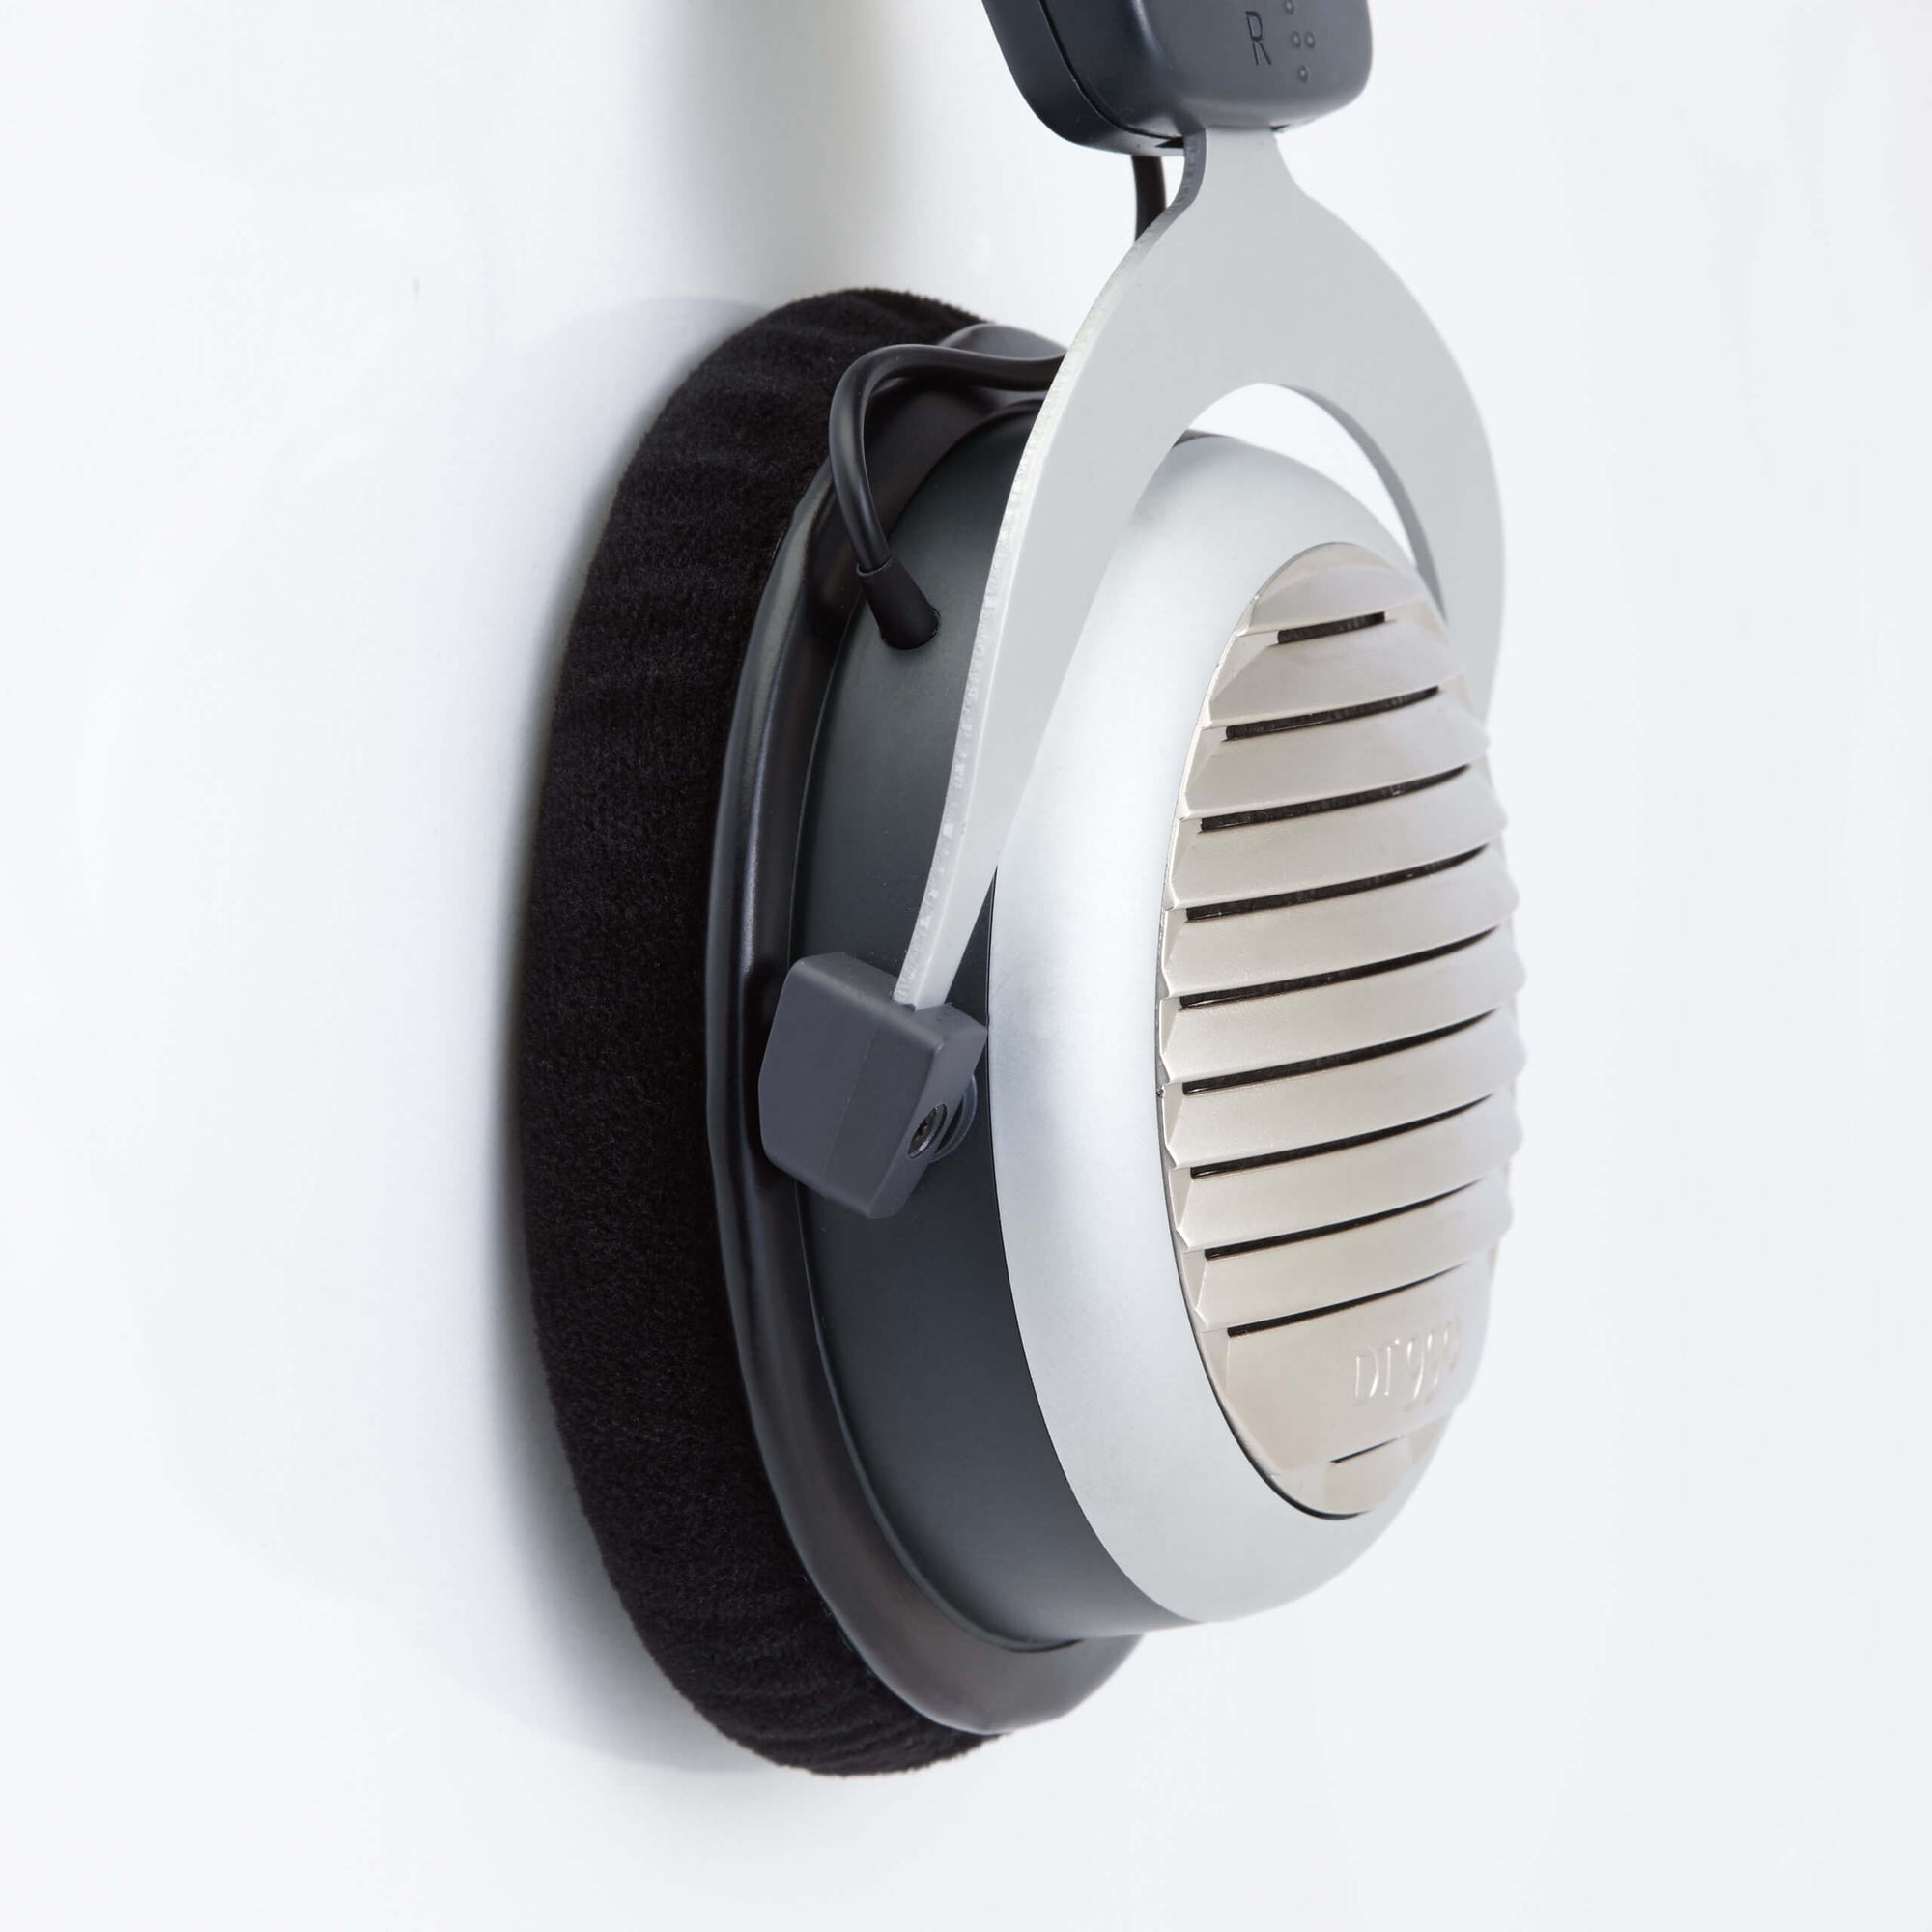 Dekoni Audio - Earpads For Beyerdynamic Headphones